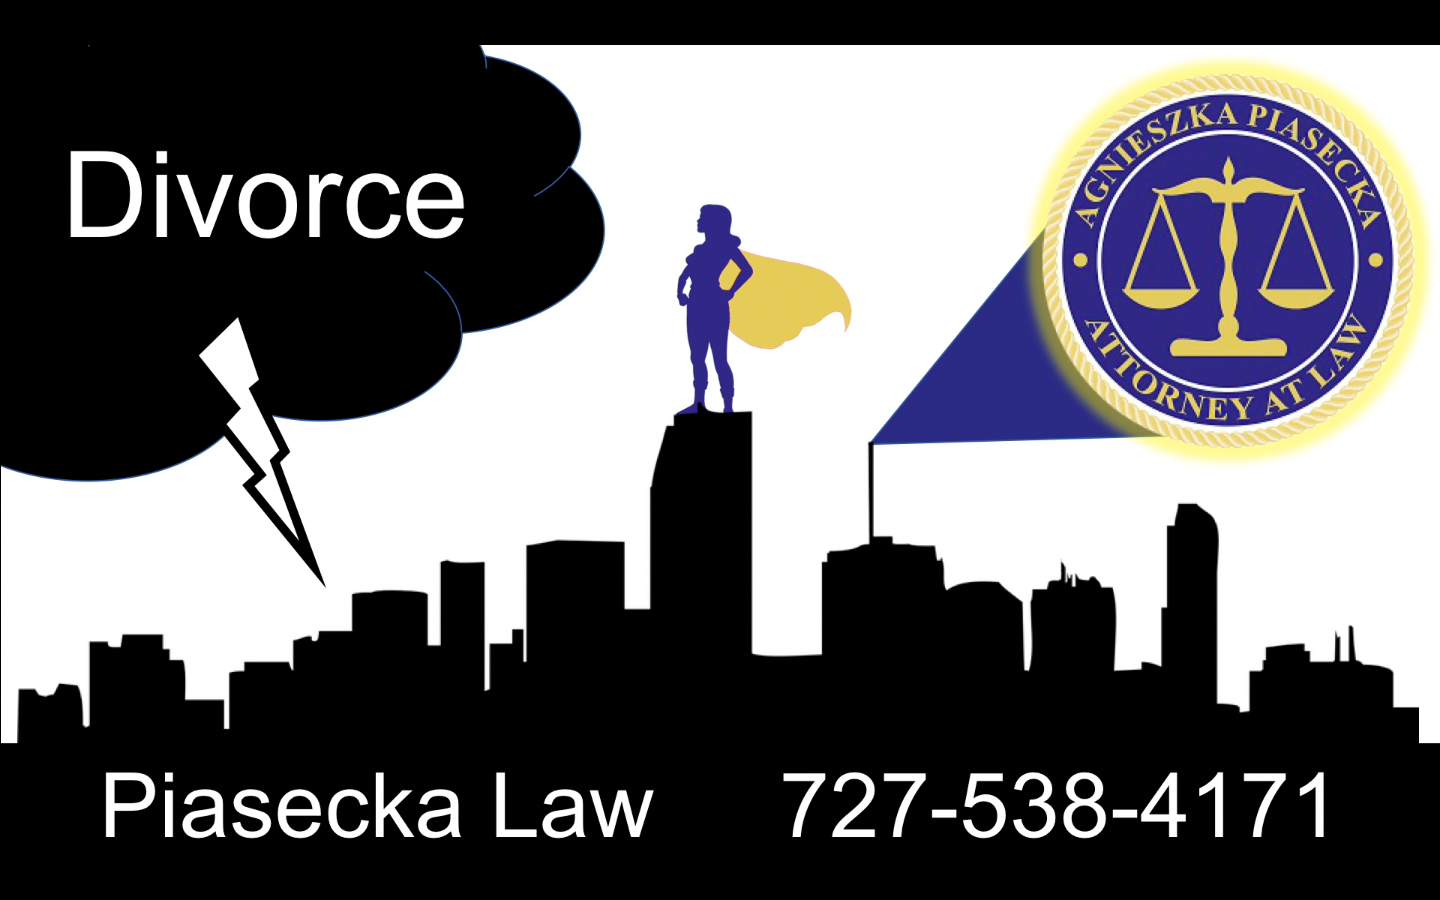 Divorce Clearwater 727-538-4171 Agnieszka Piasecka Law